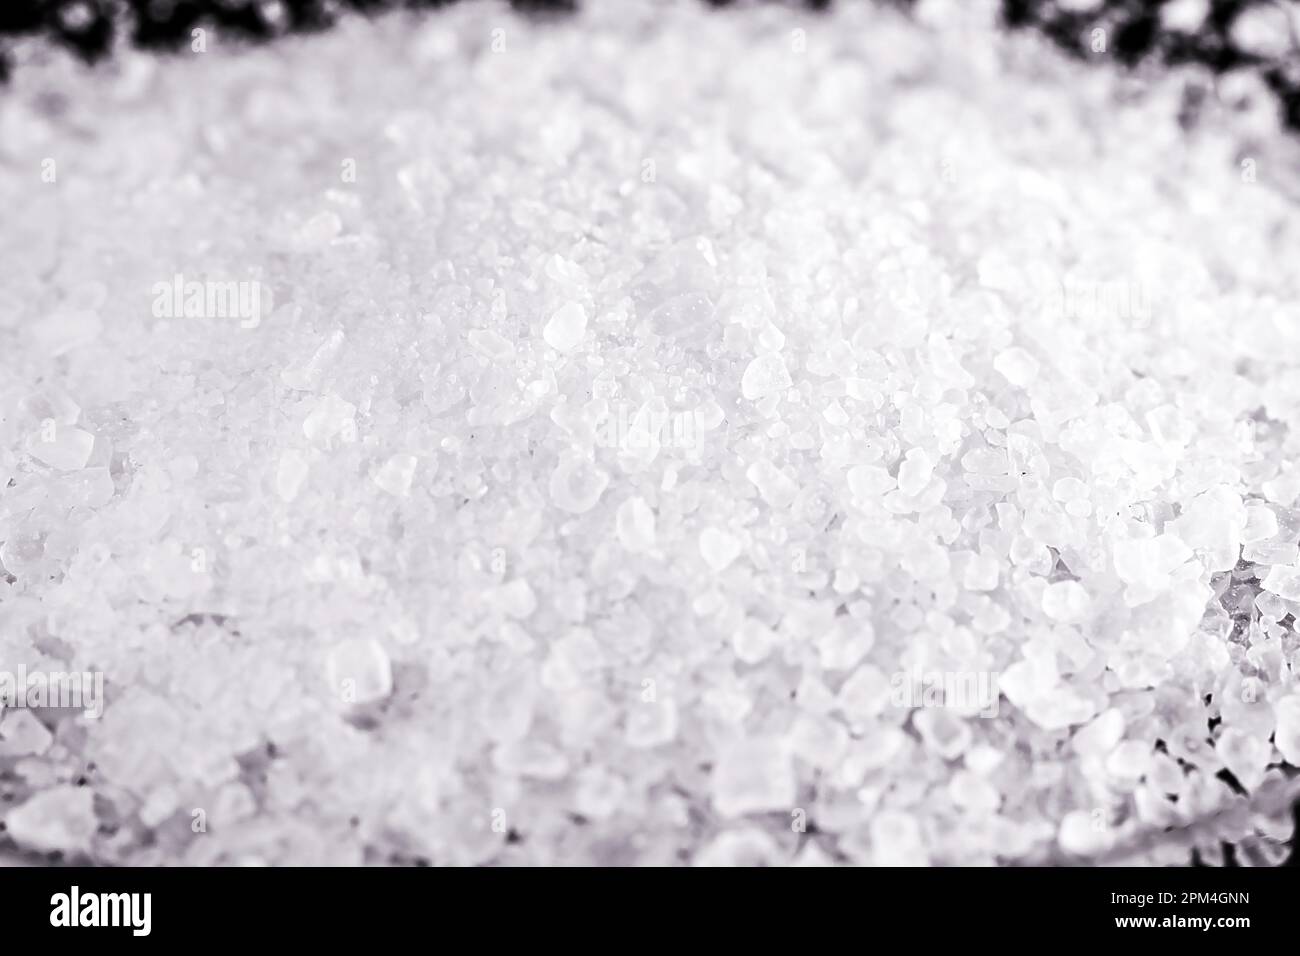 petri dish, with cyanide crystals. Potassium cyanide or potassium cyanide  is a highly toxic chemical compound, MACRO PHOTOGRAPHY Stock Photo - Alamy